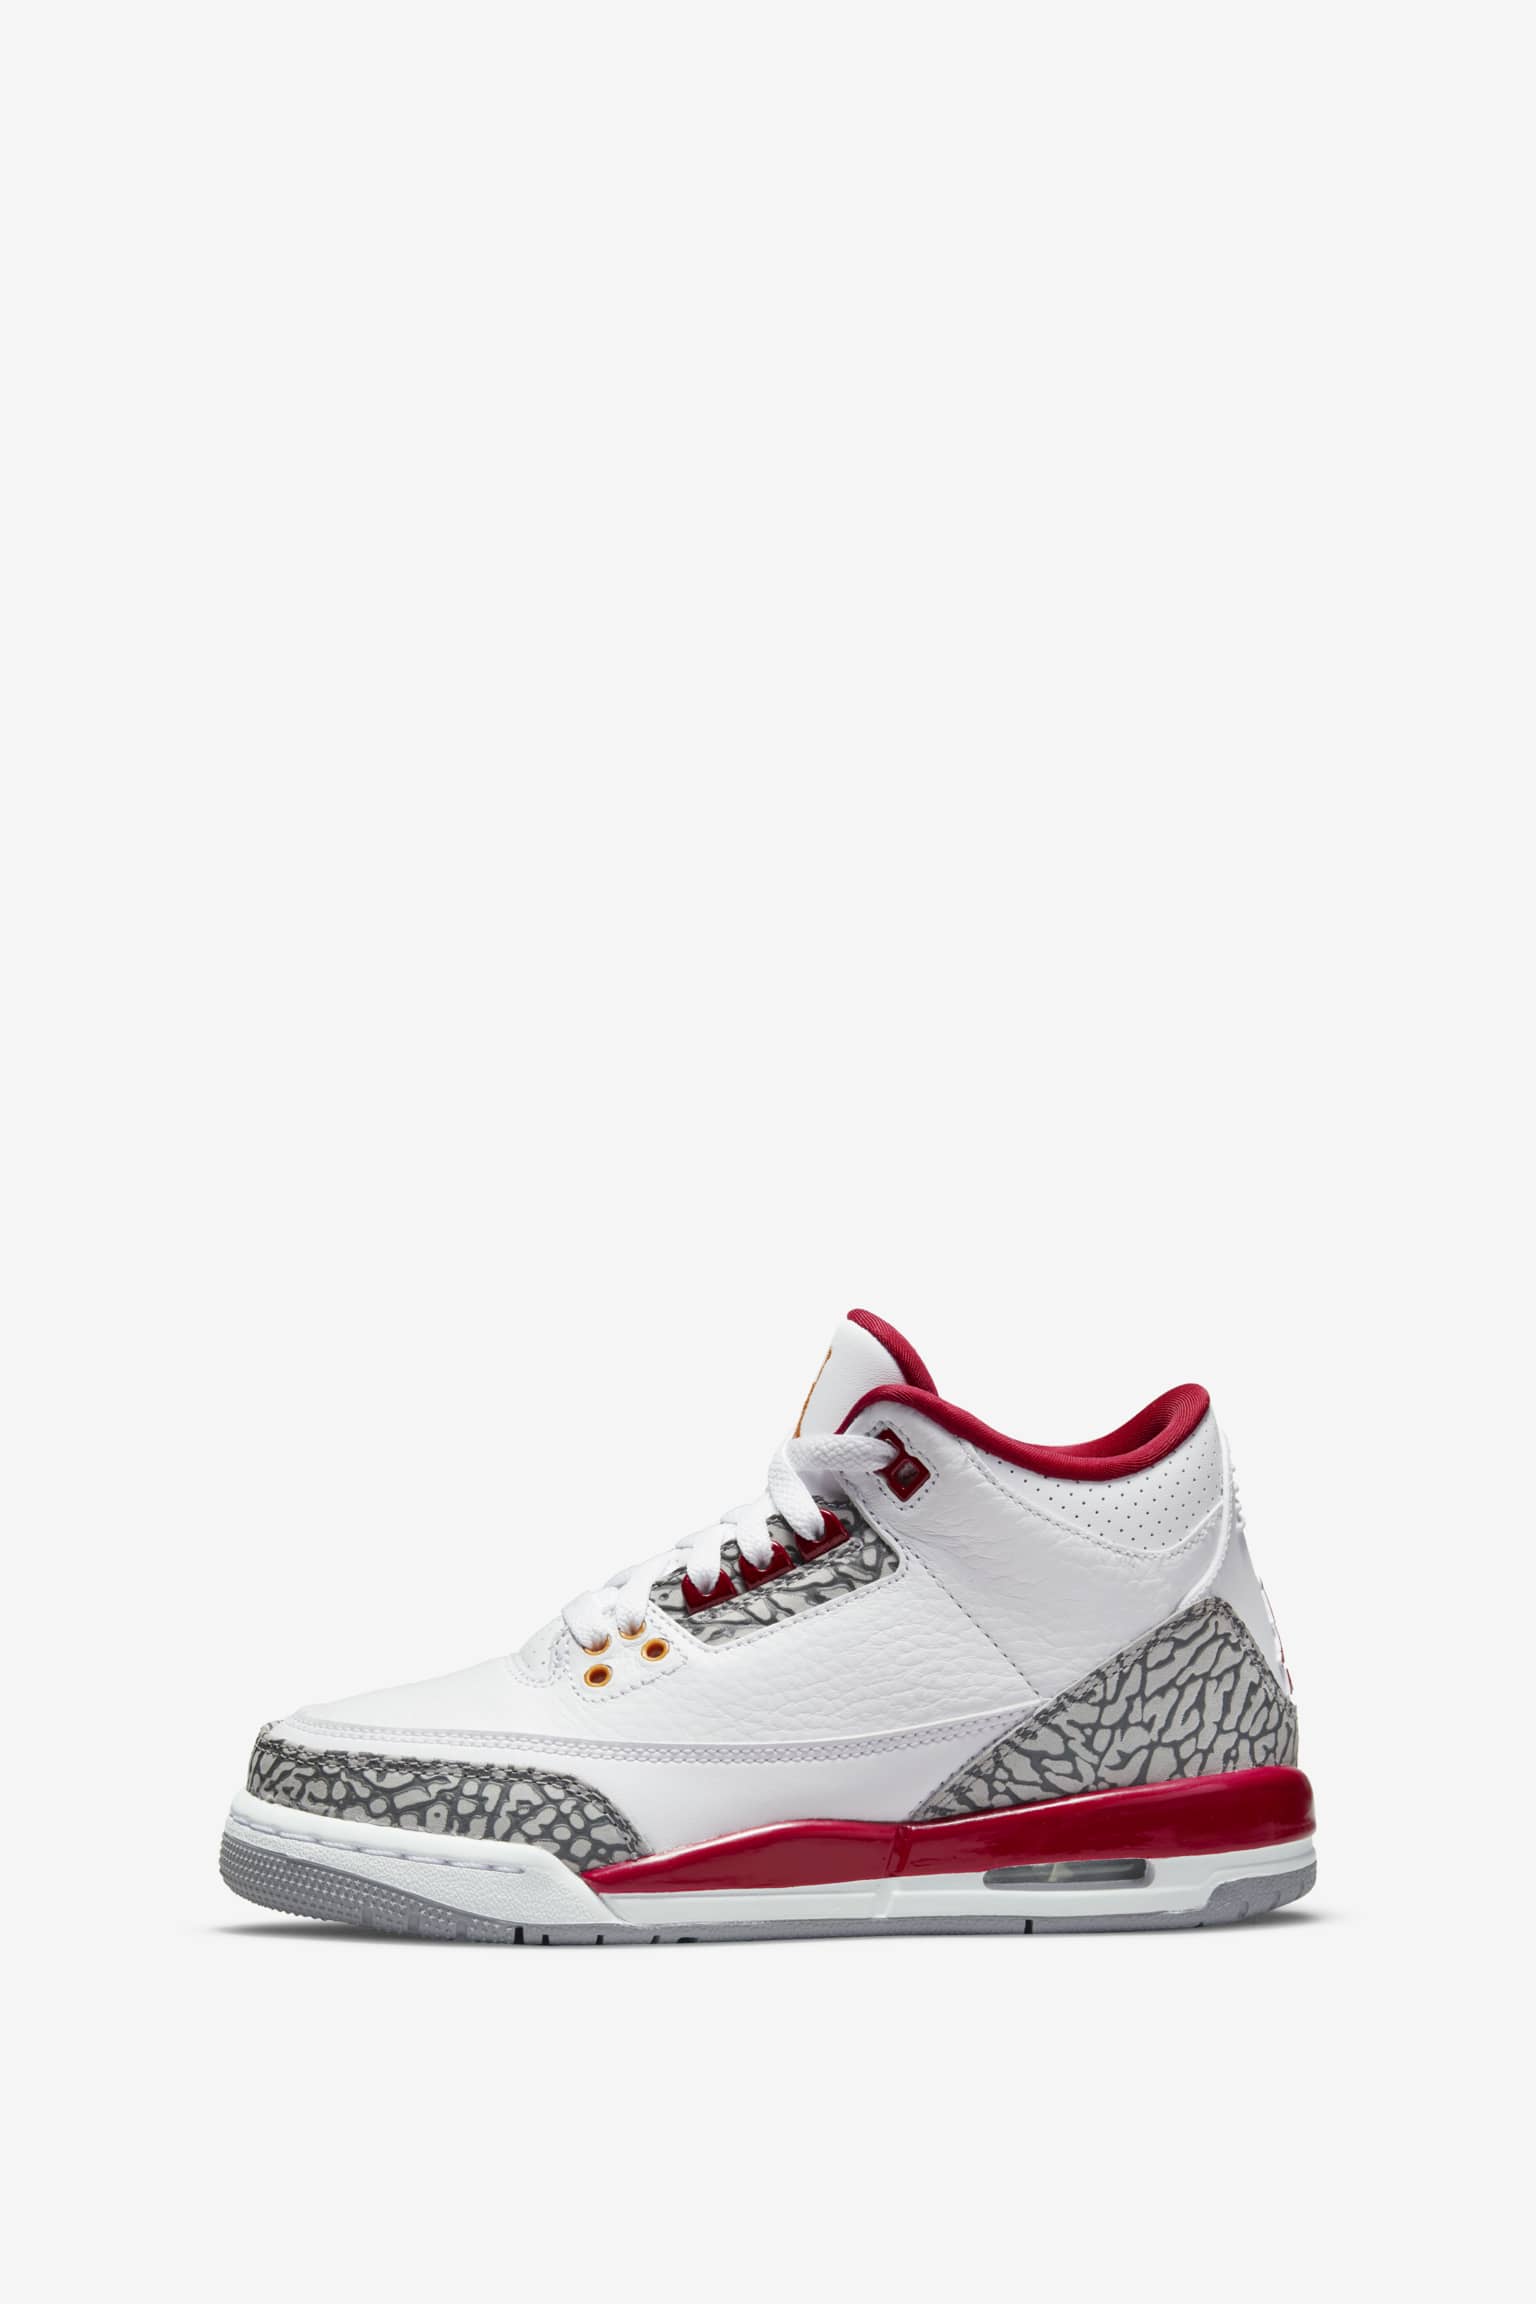 Nike Air Jordan 3 "Cardinal Red"